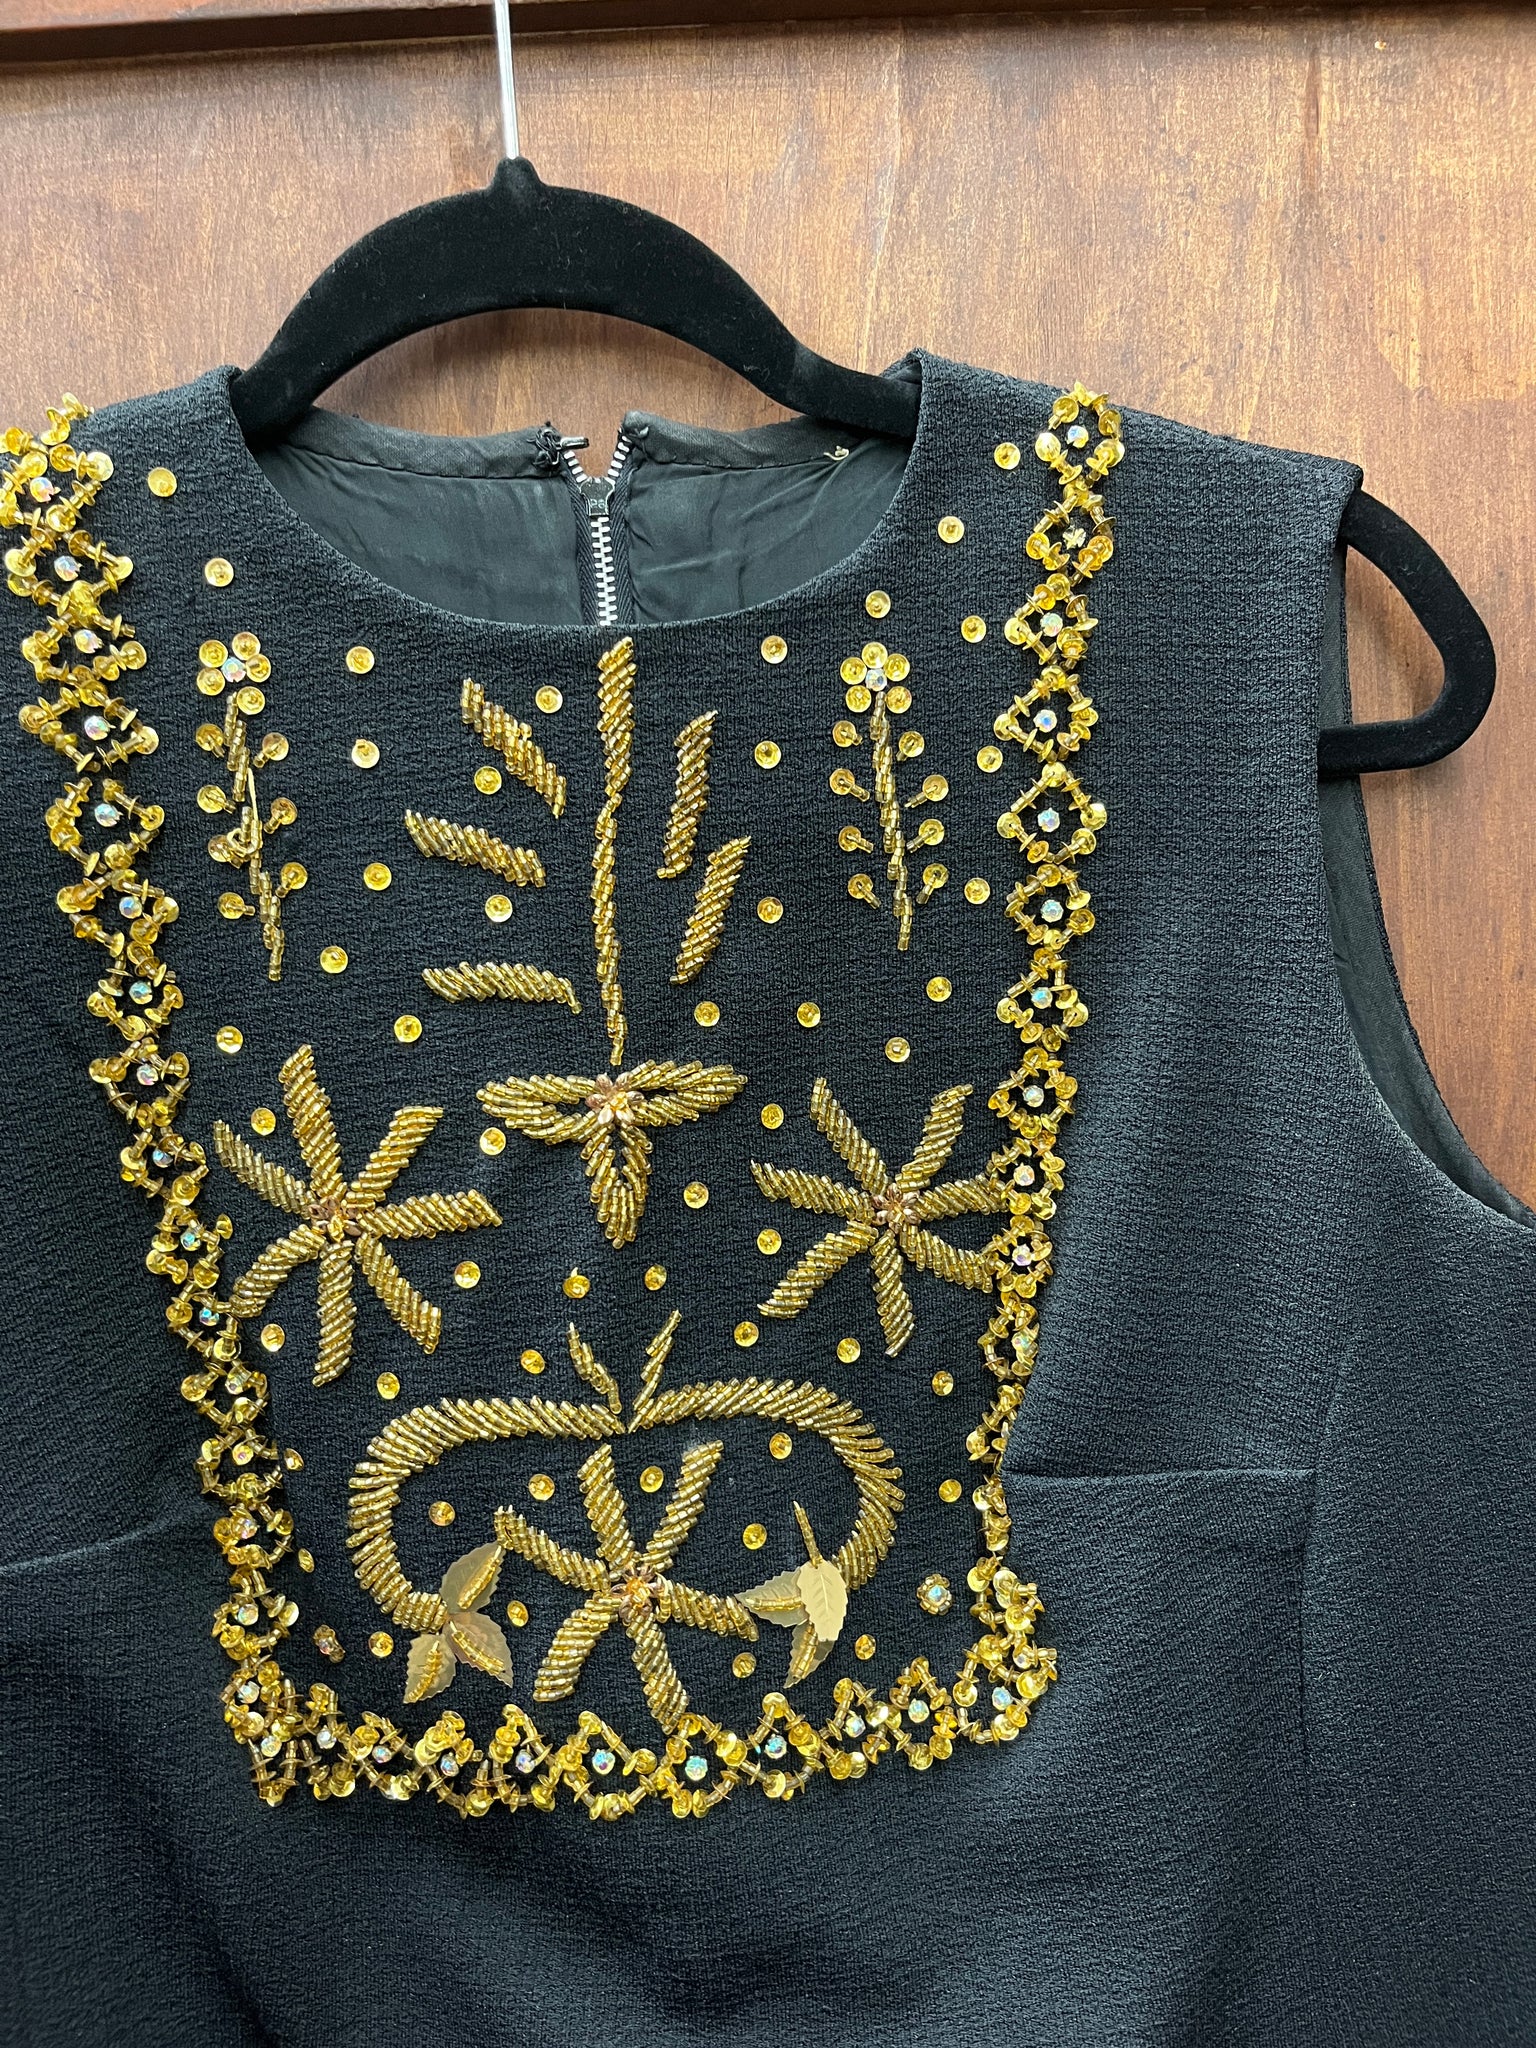 1960S DRESS- black with gold hand beading detail sleeveless